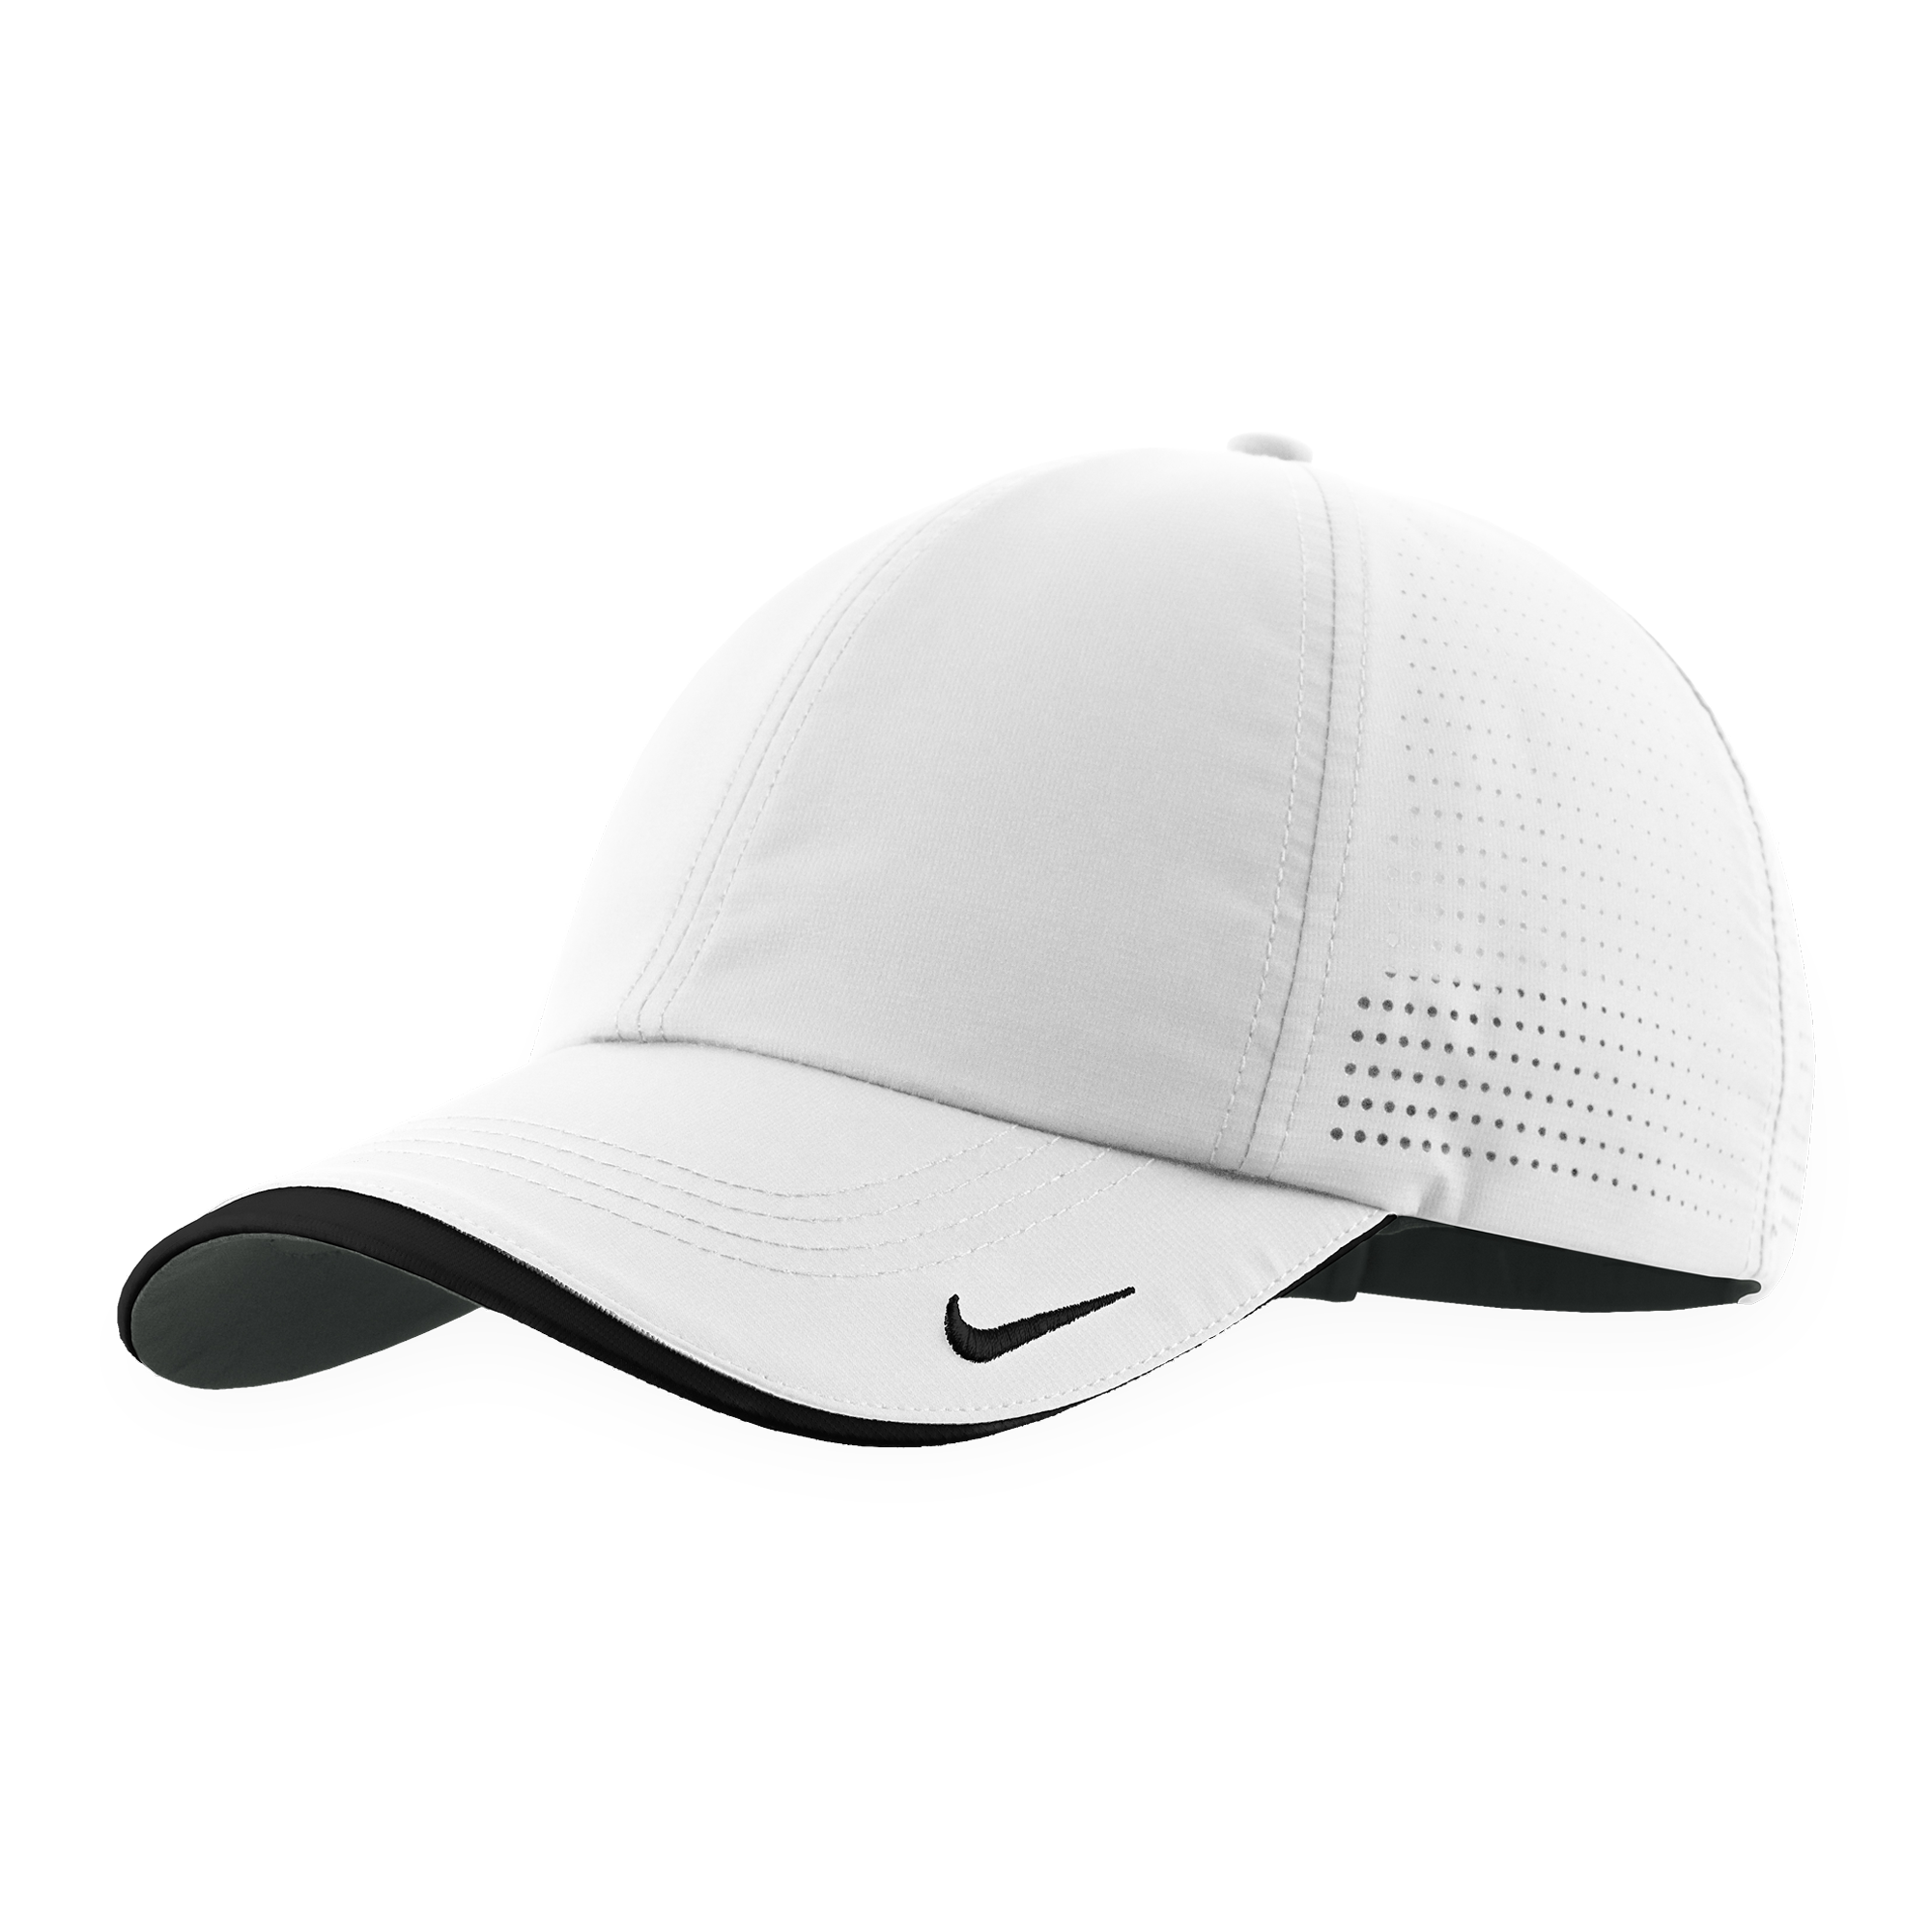 Customized Nike Golf Dri-FIT Swoosh Perforated Cap | Printfection